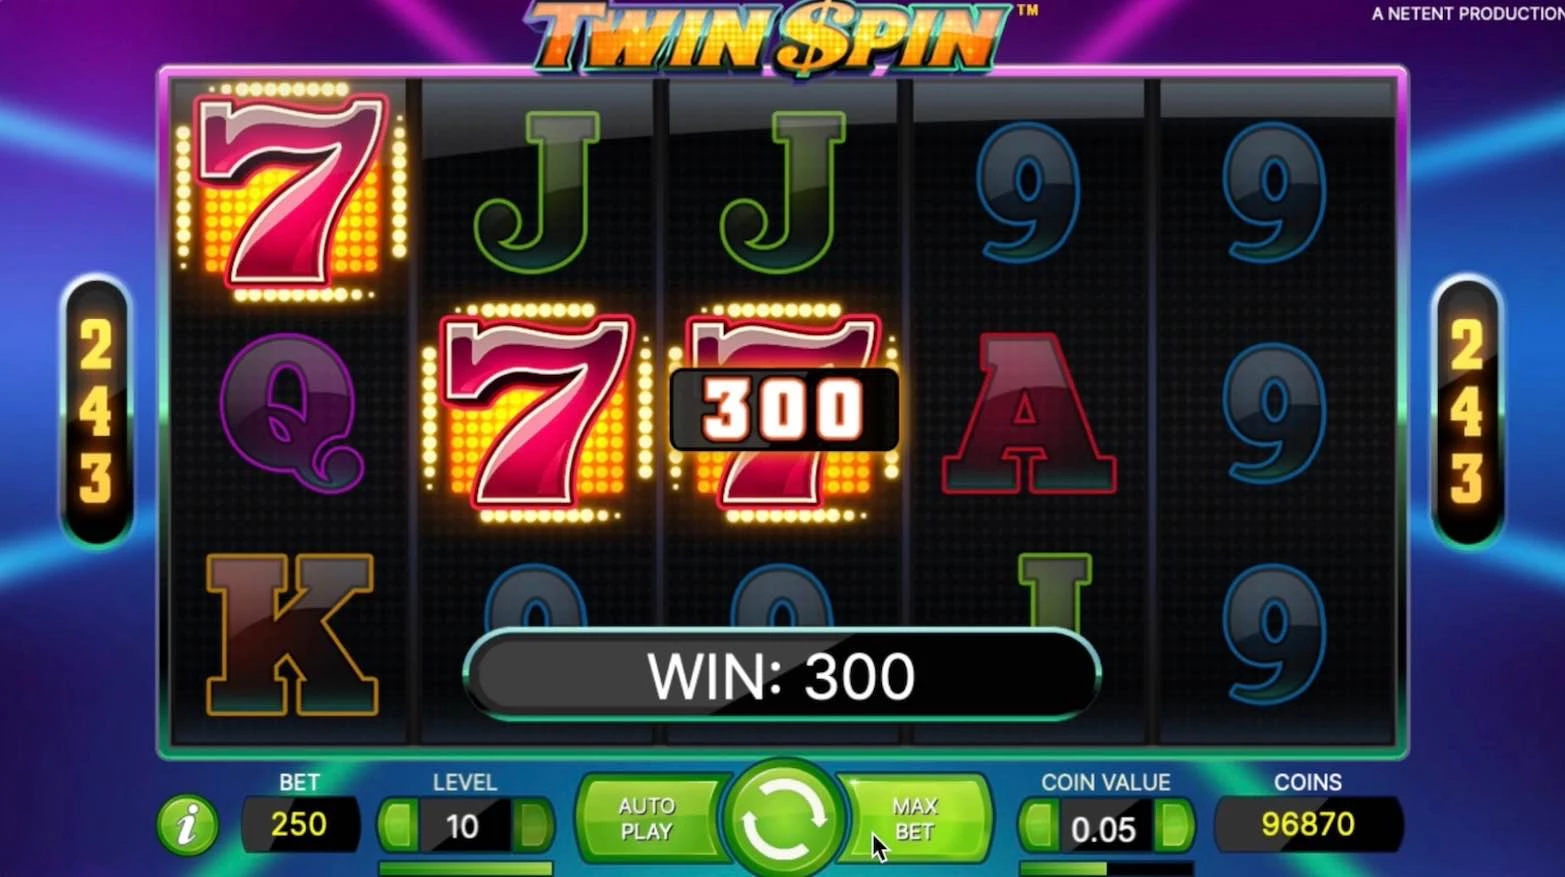 Twin Spin Slot by NetEnt - Seven symbol won $300